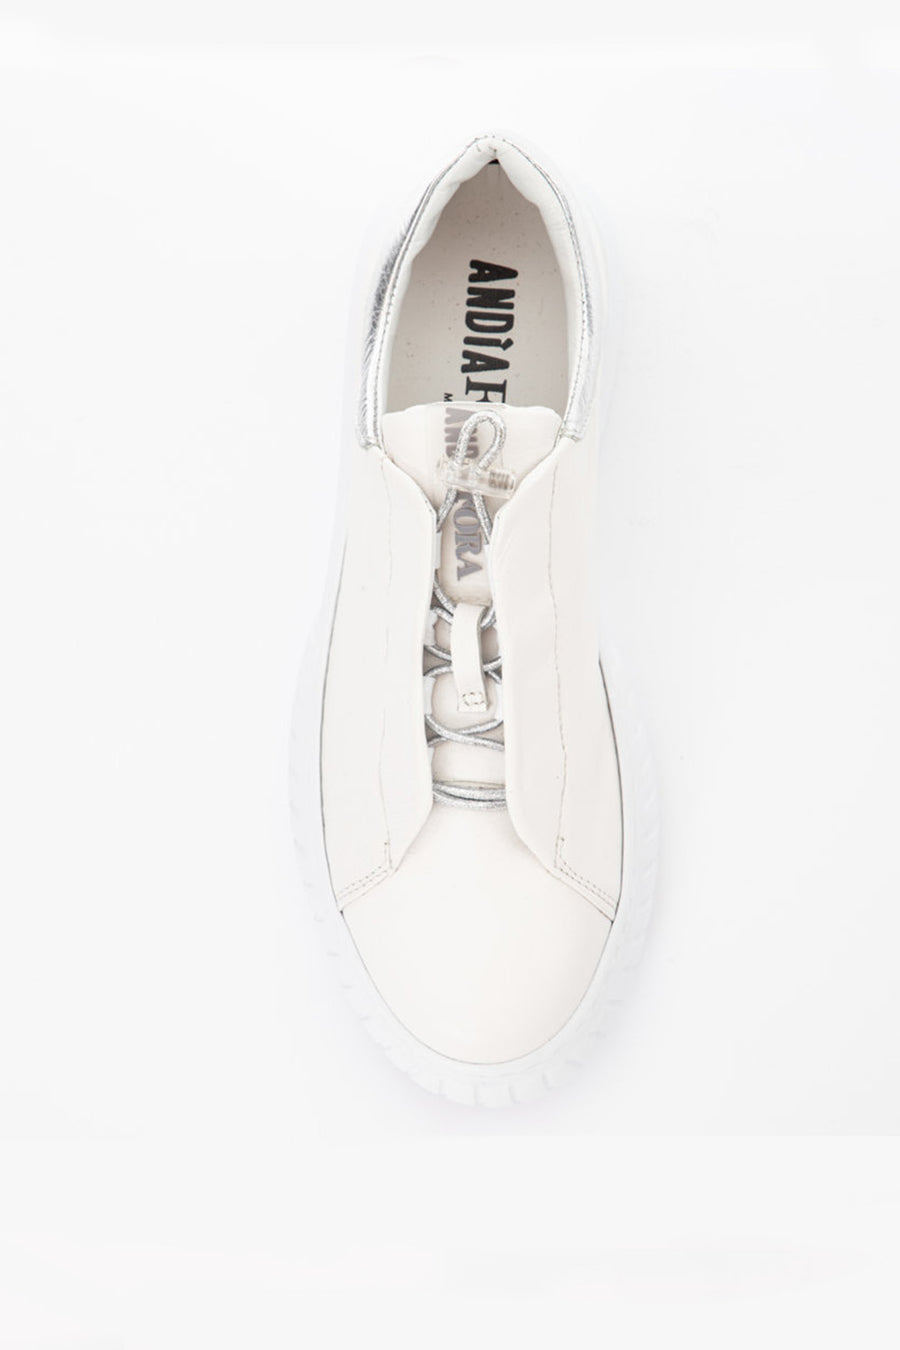 Sneakers Andiafora in pelle color bianco LIBI